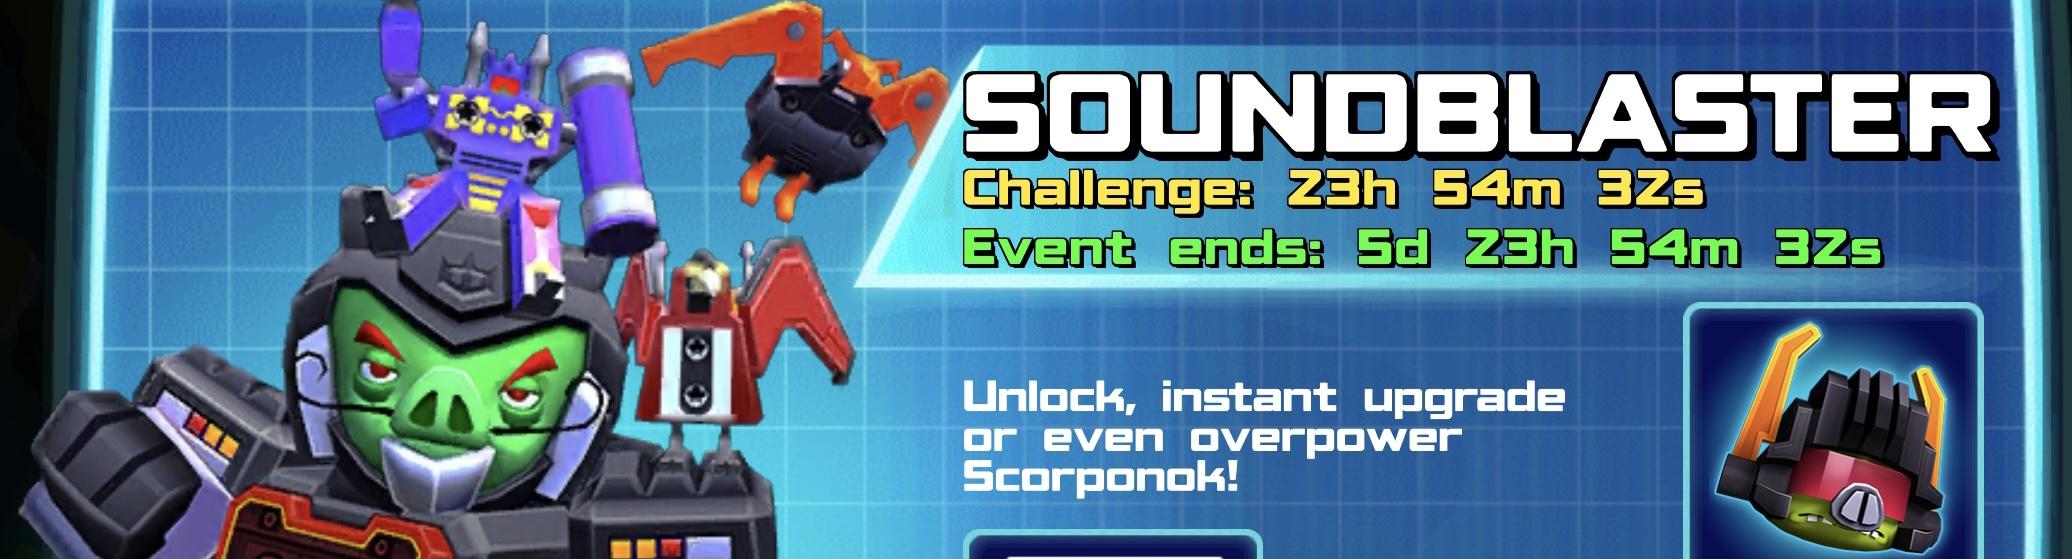 The event banner forevent banner for Soundblaster